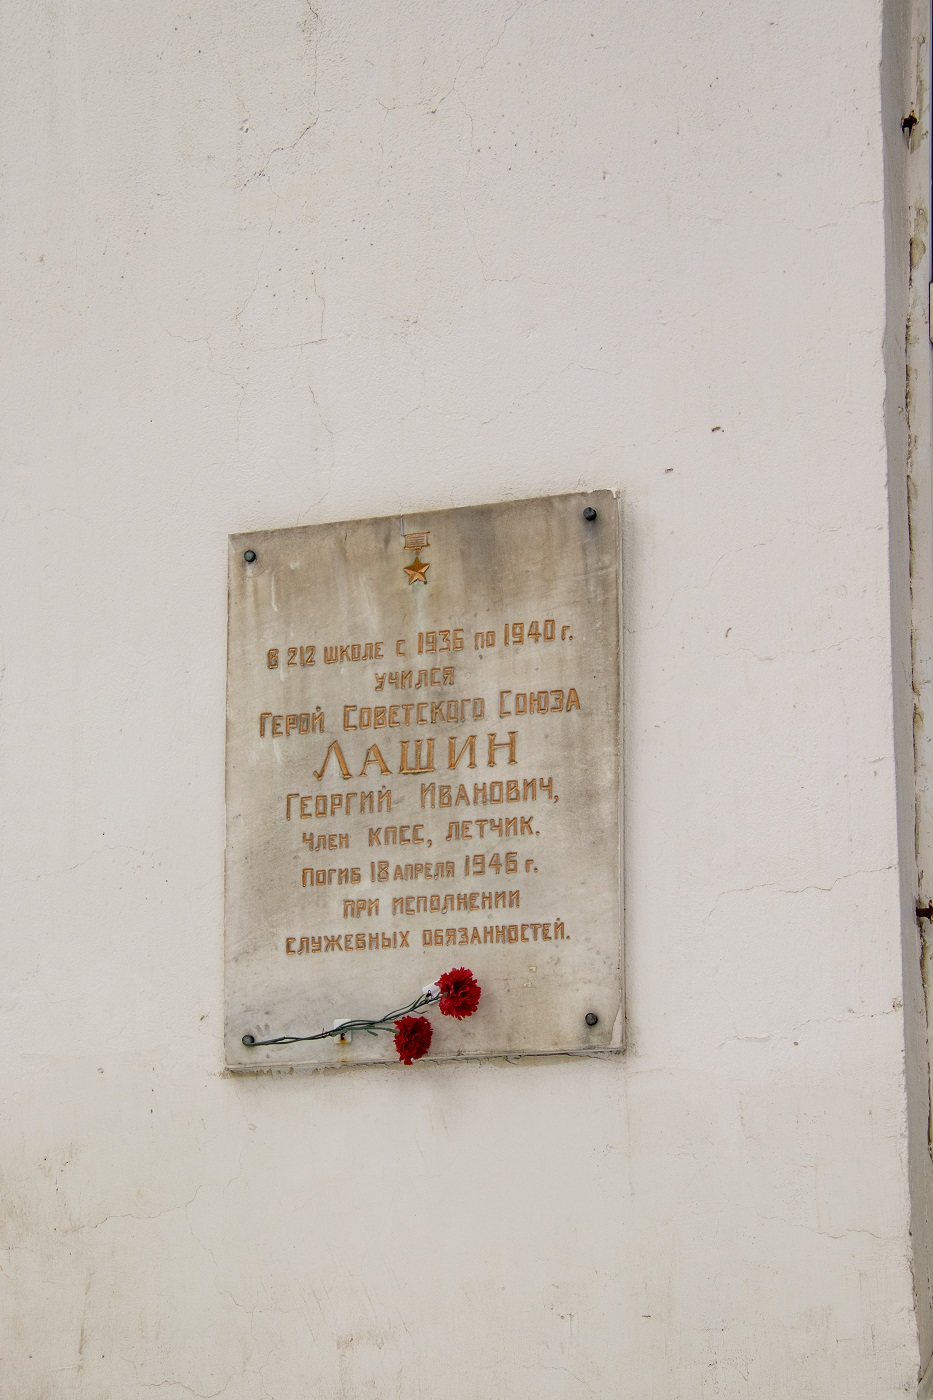 Moscow, 4-й Новомихалковский проезд, 9А. Moscow — Memorial plaques